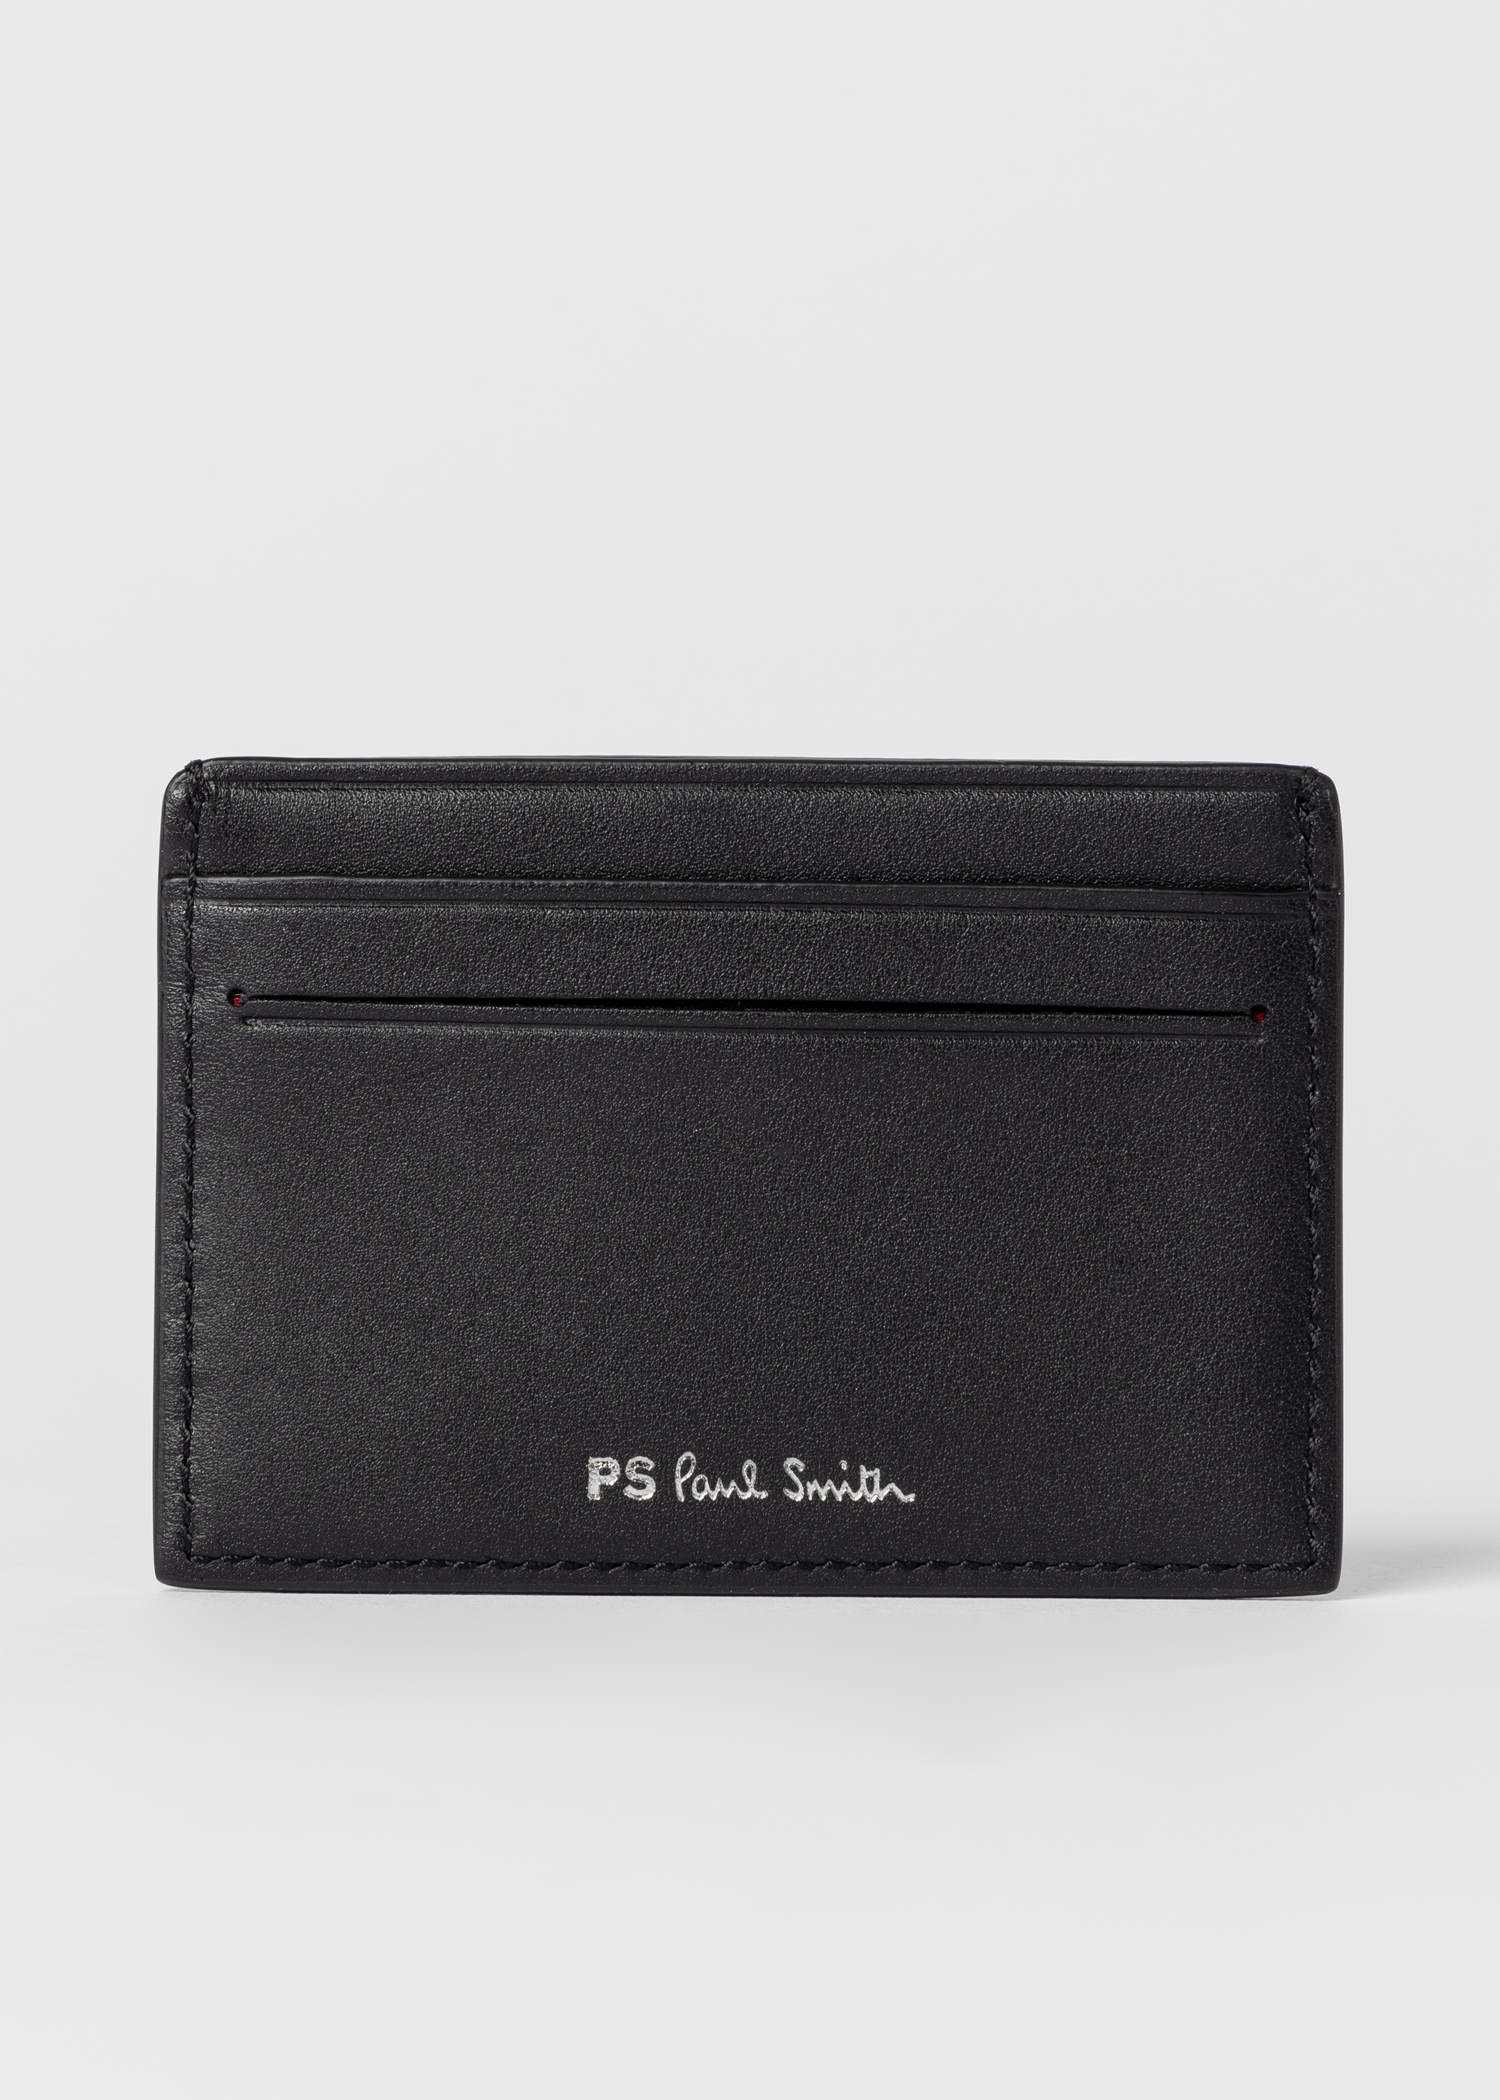 Designer Wallets for Men | Paul Smith